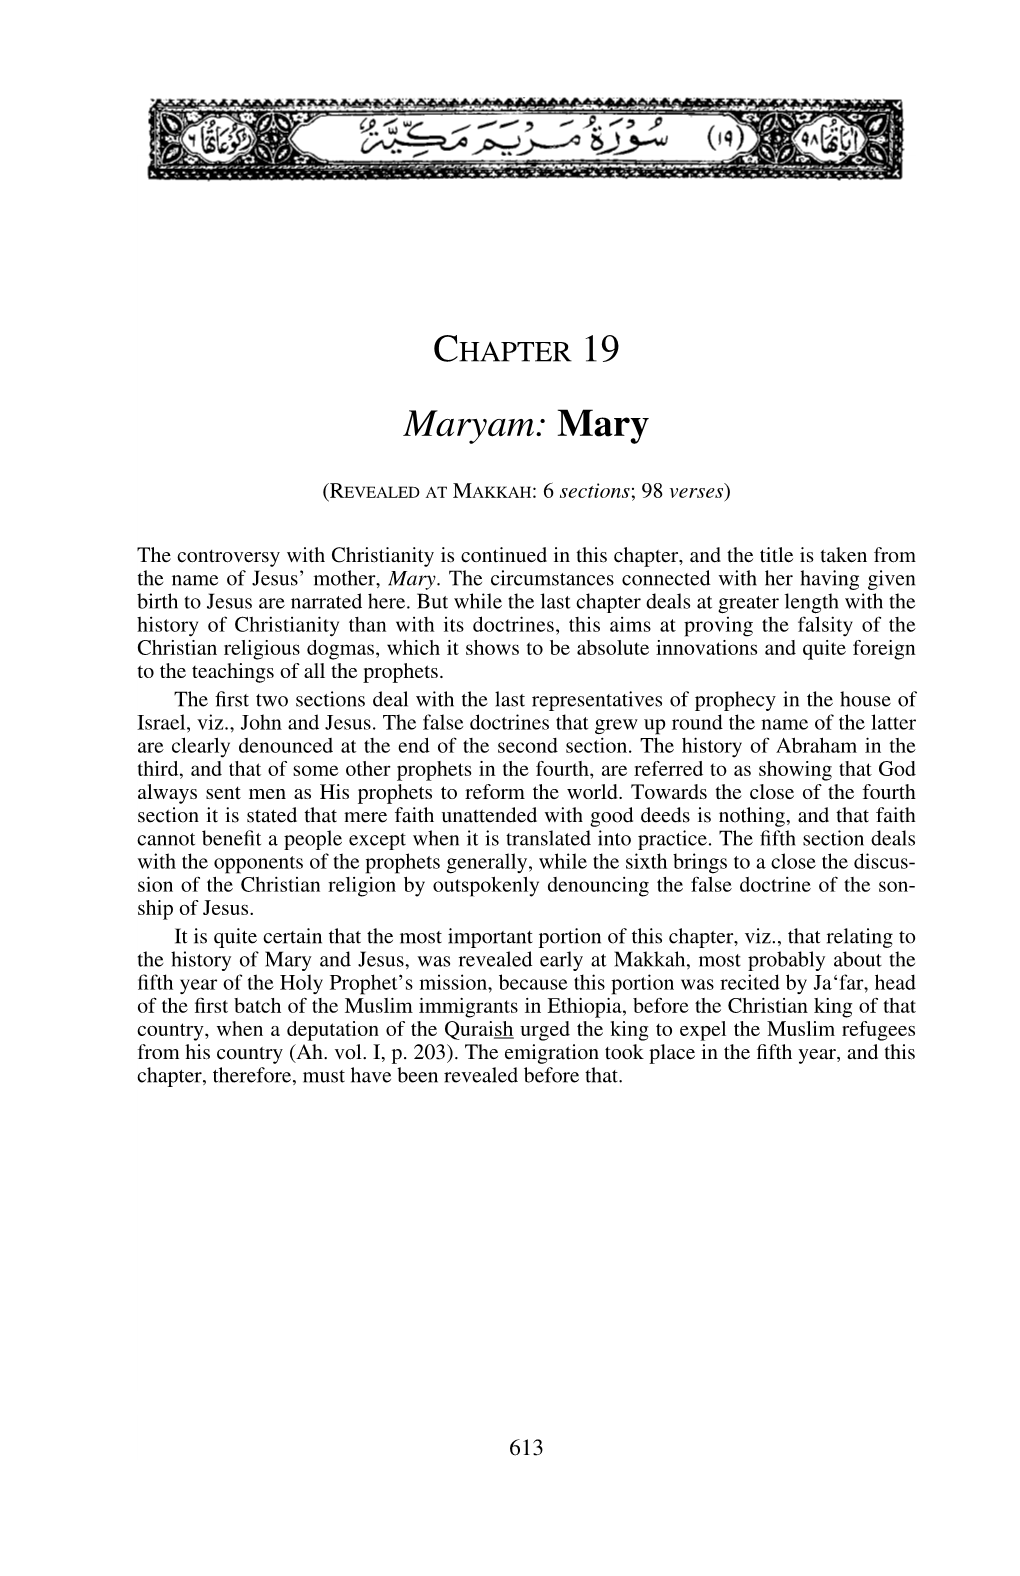 CHAPTER 19 Maryam: Mary